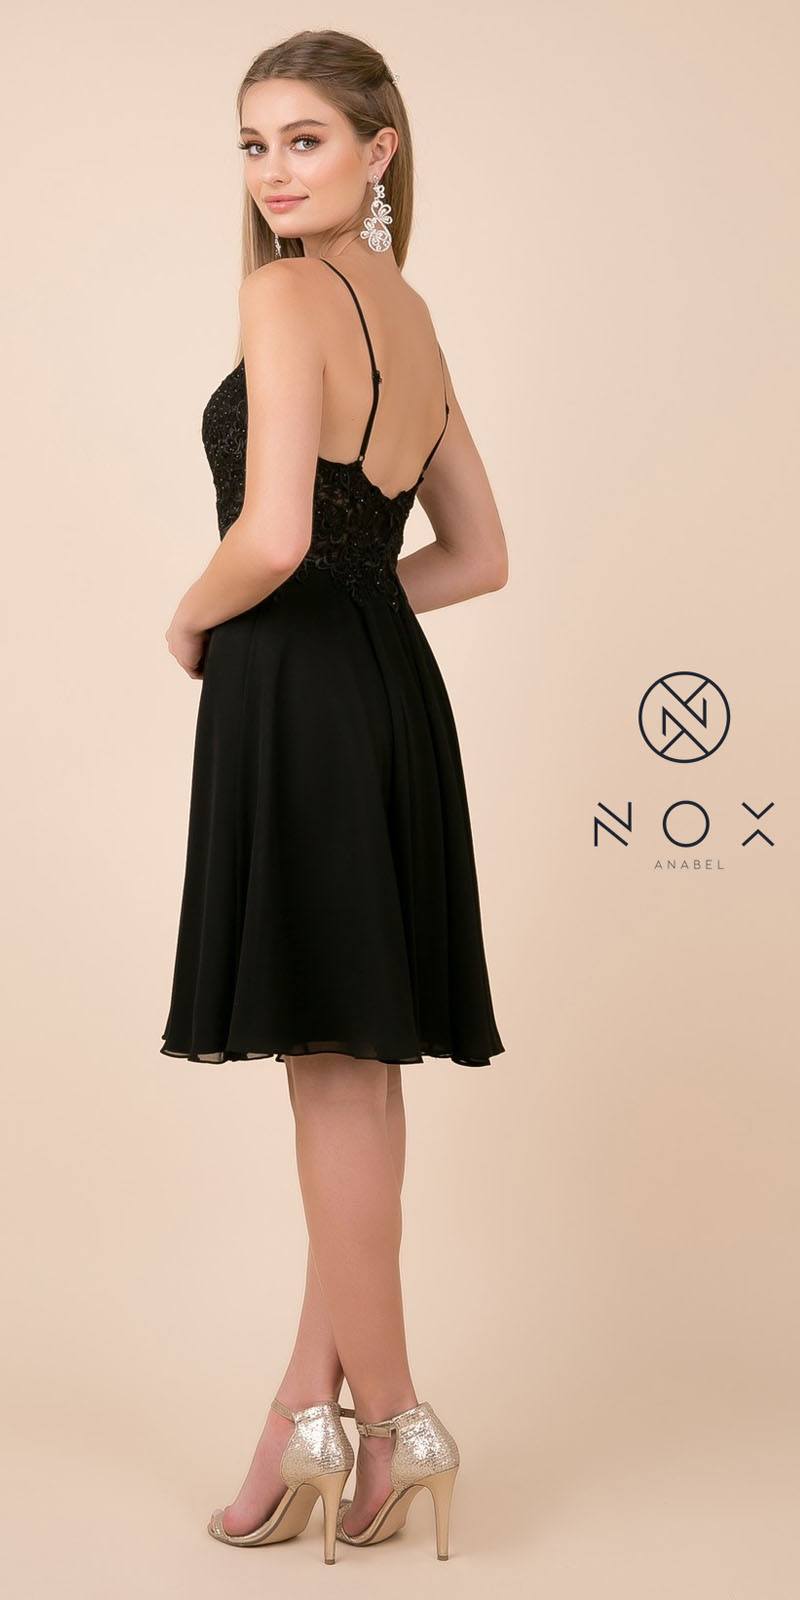 Nox Anabel A660 Knee Length Black Homecoming Dress Flowy Chiffon